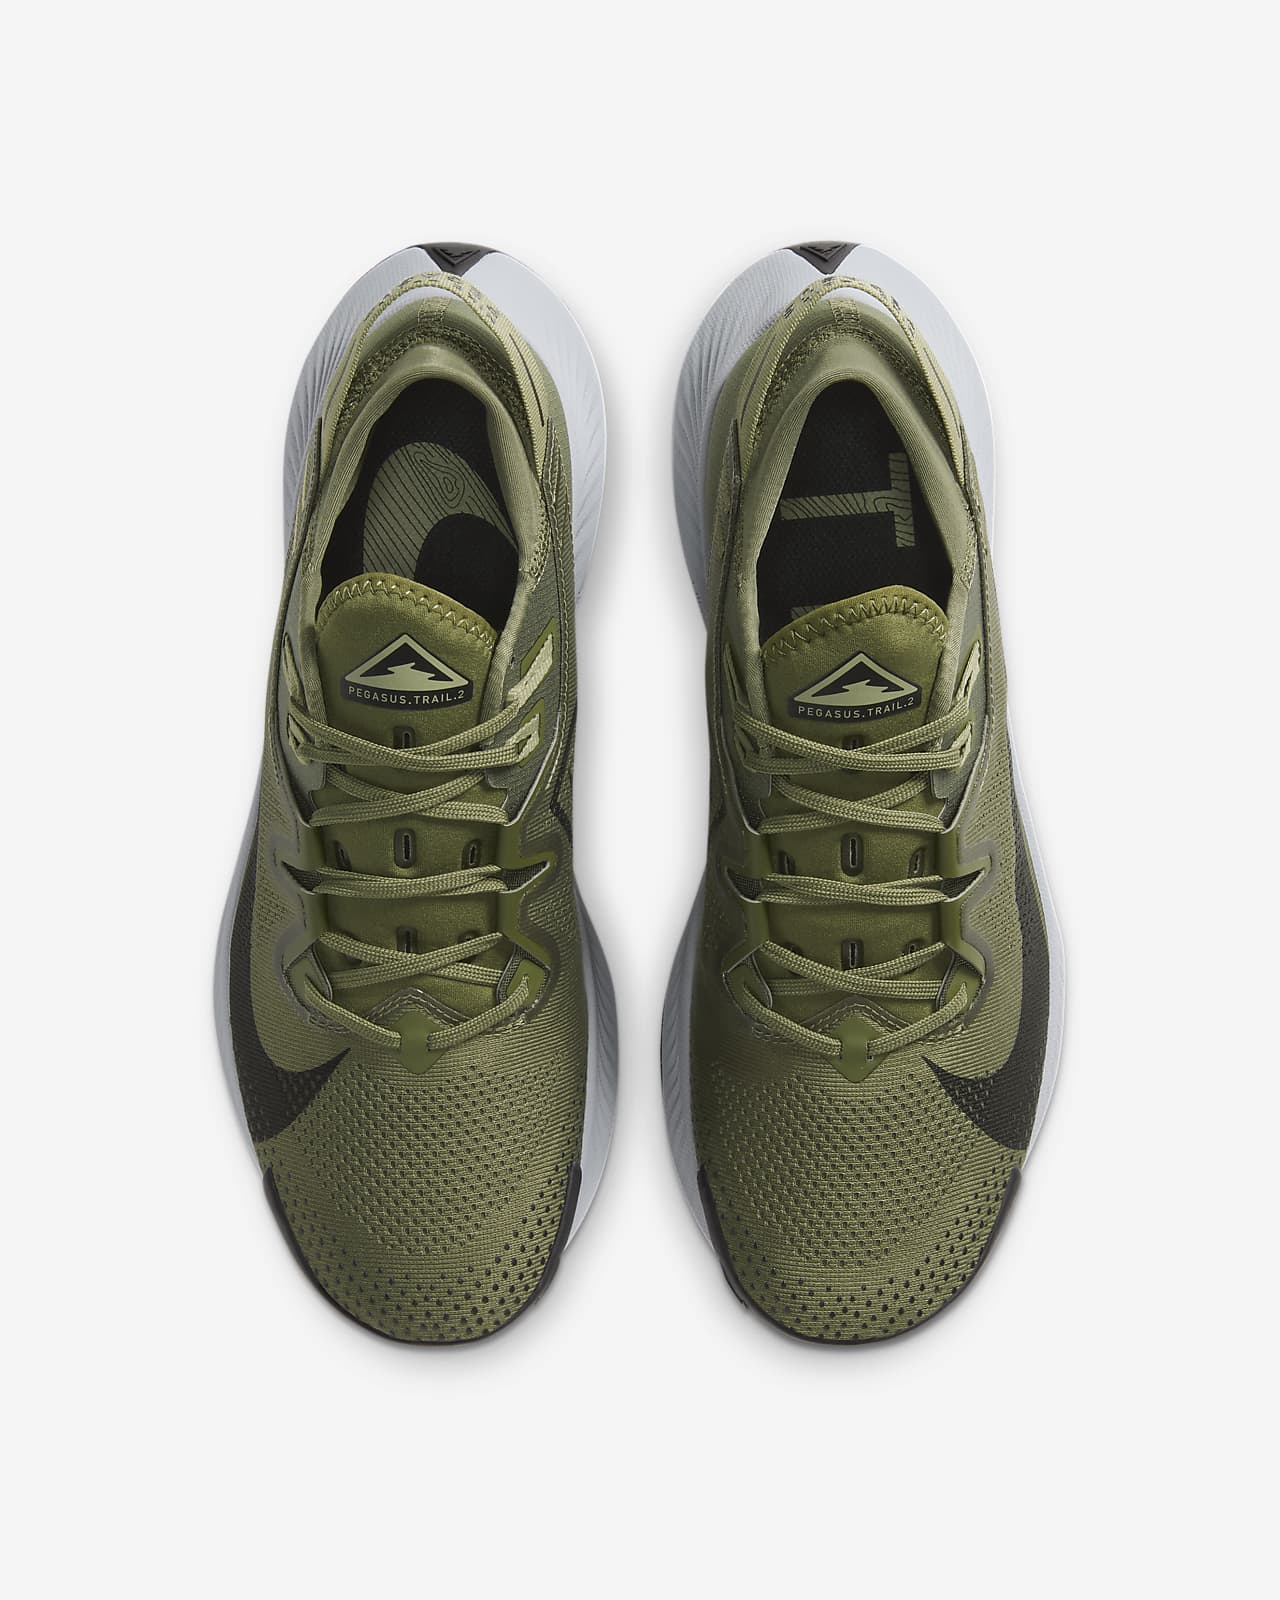 Trail Running Shoe. Nike NZ